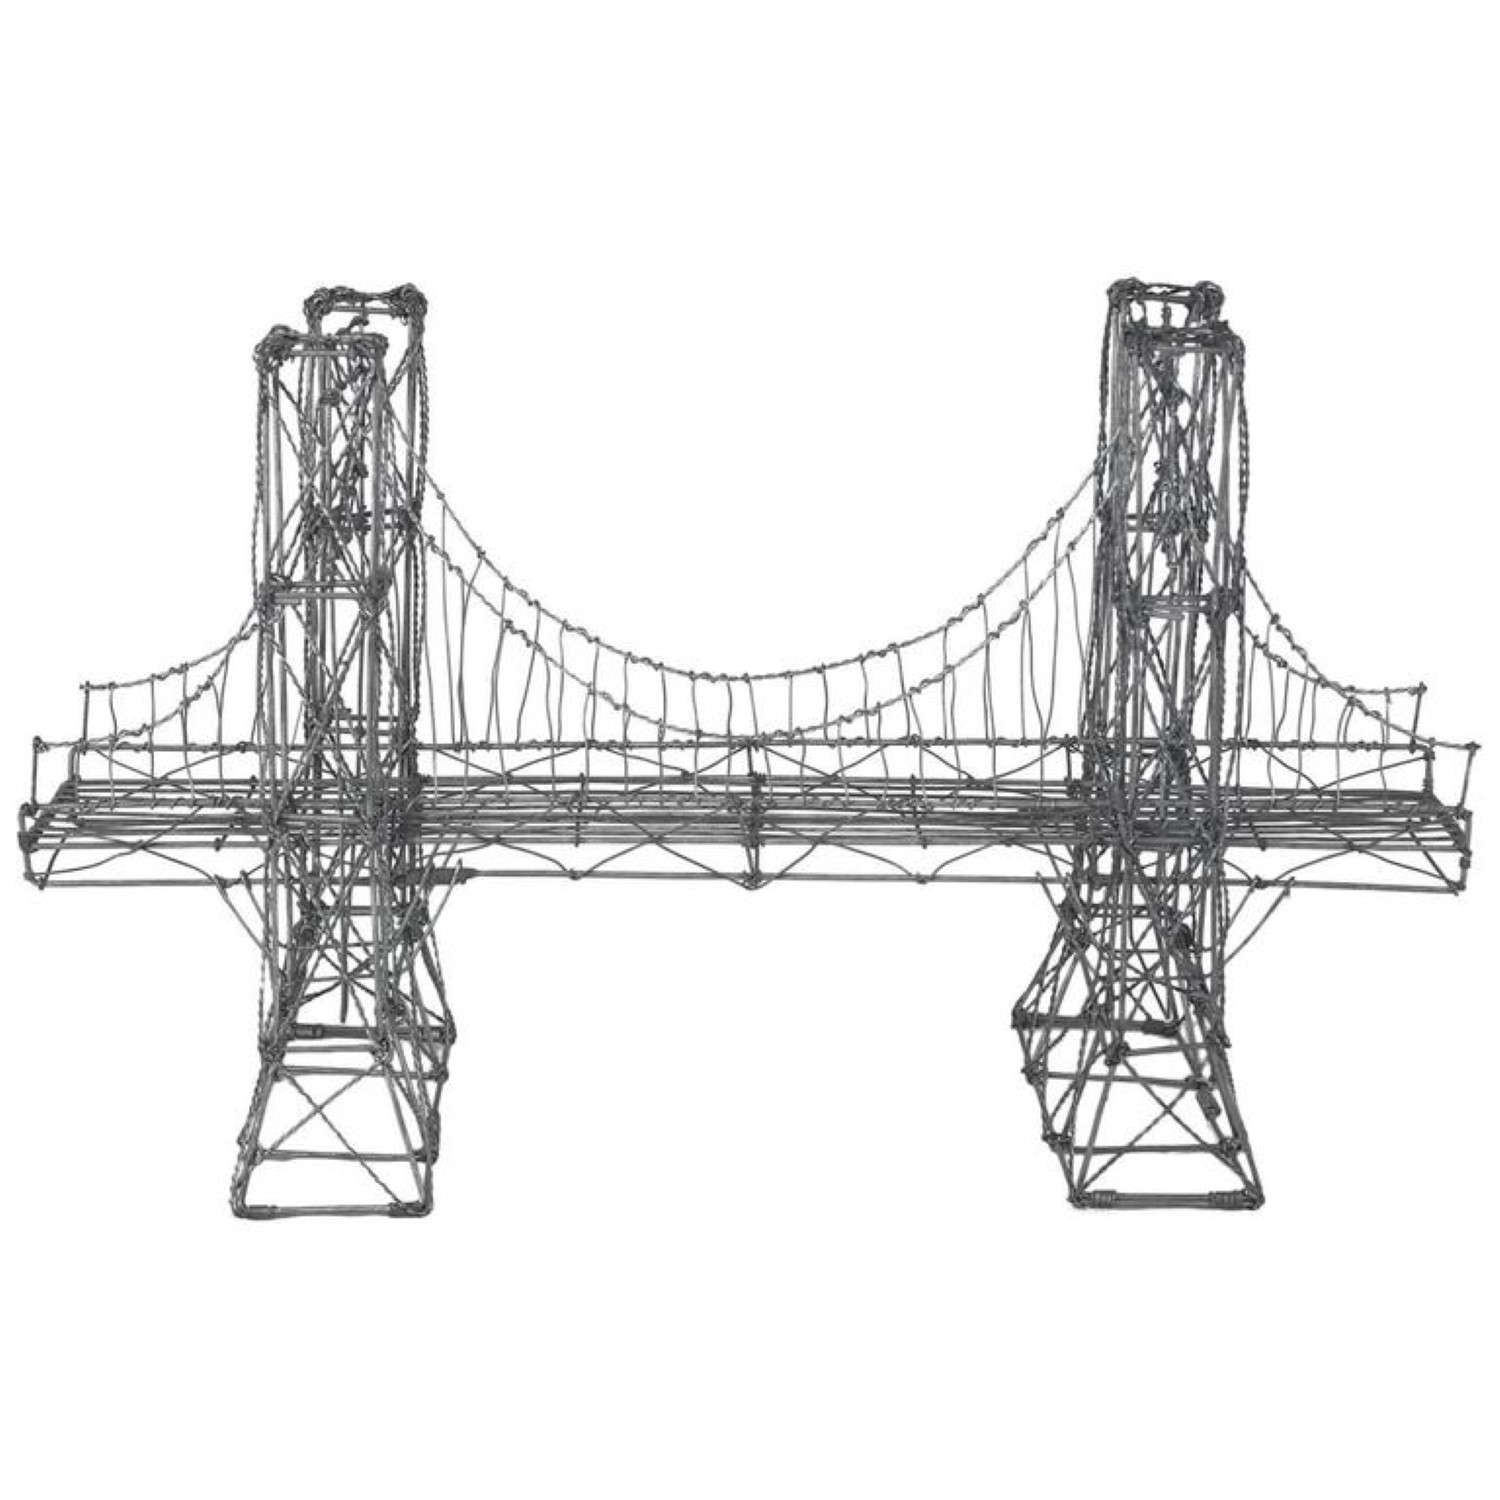 Vintage Folk Art Wire Suspension Bridge Model Sculpture